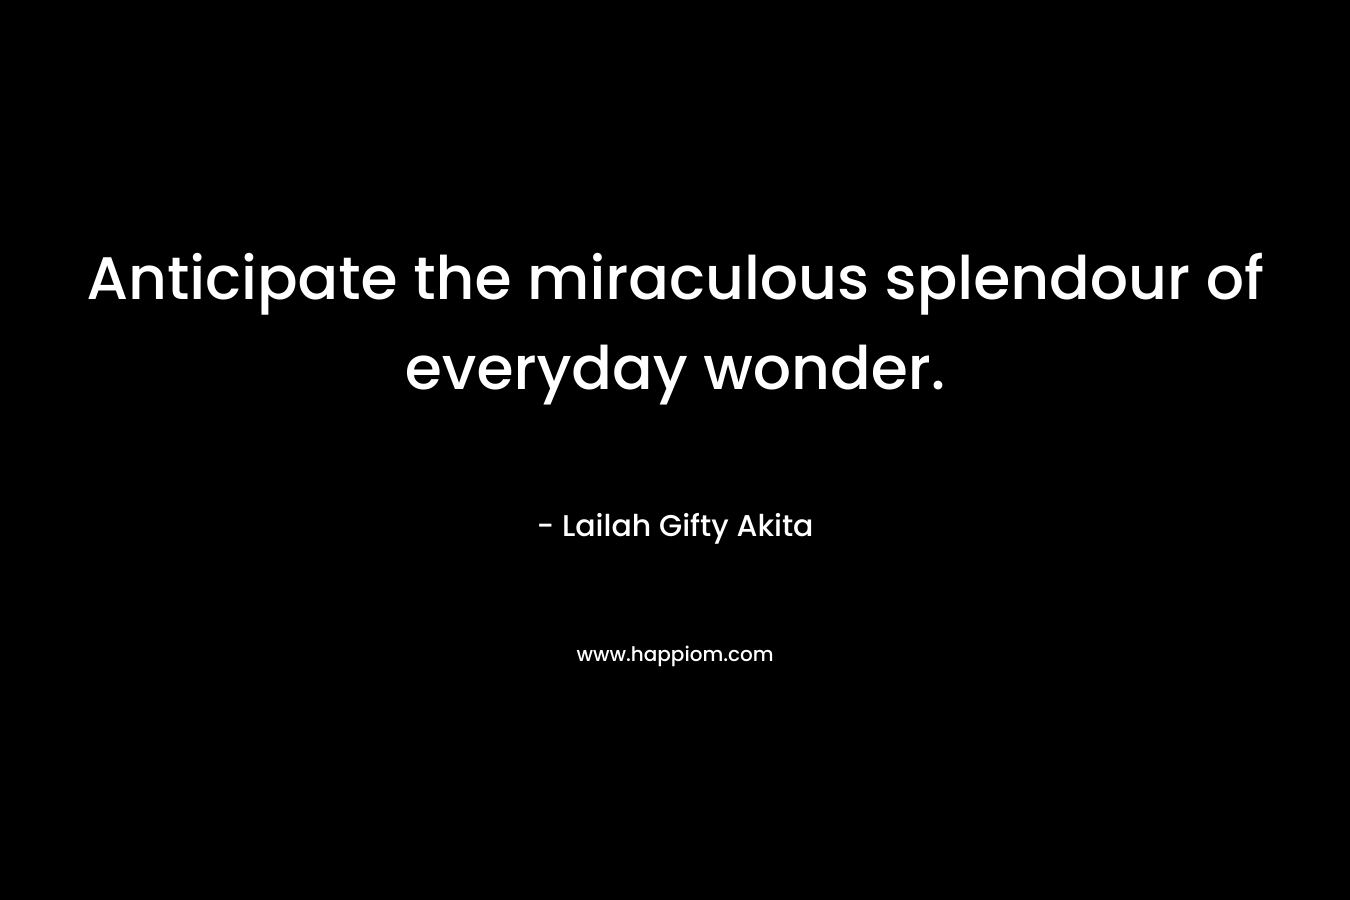 Anticipate the miraculous splendour of everyday wonder.